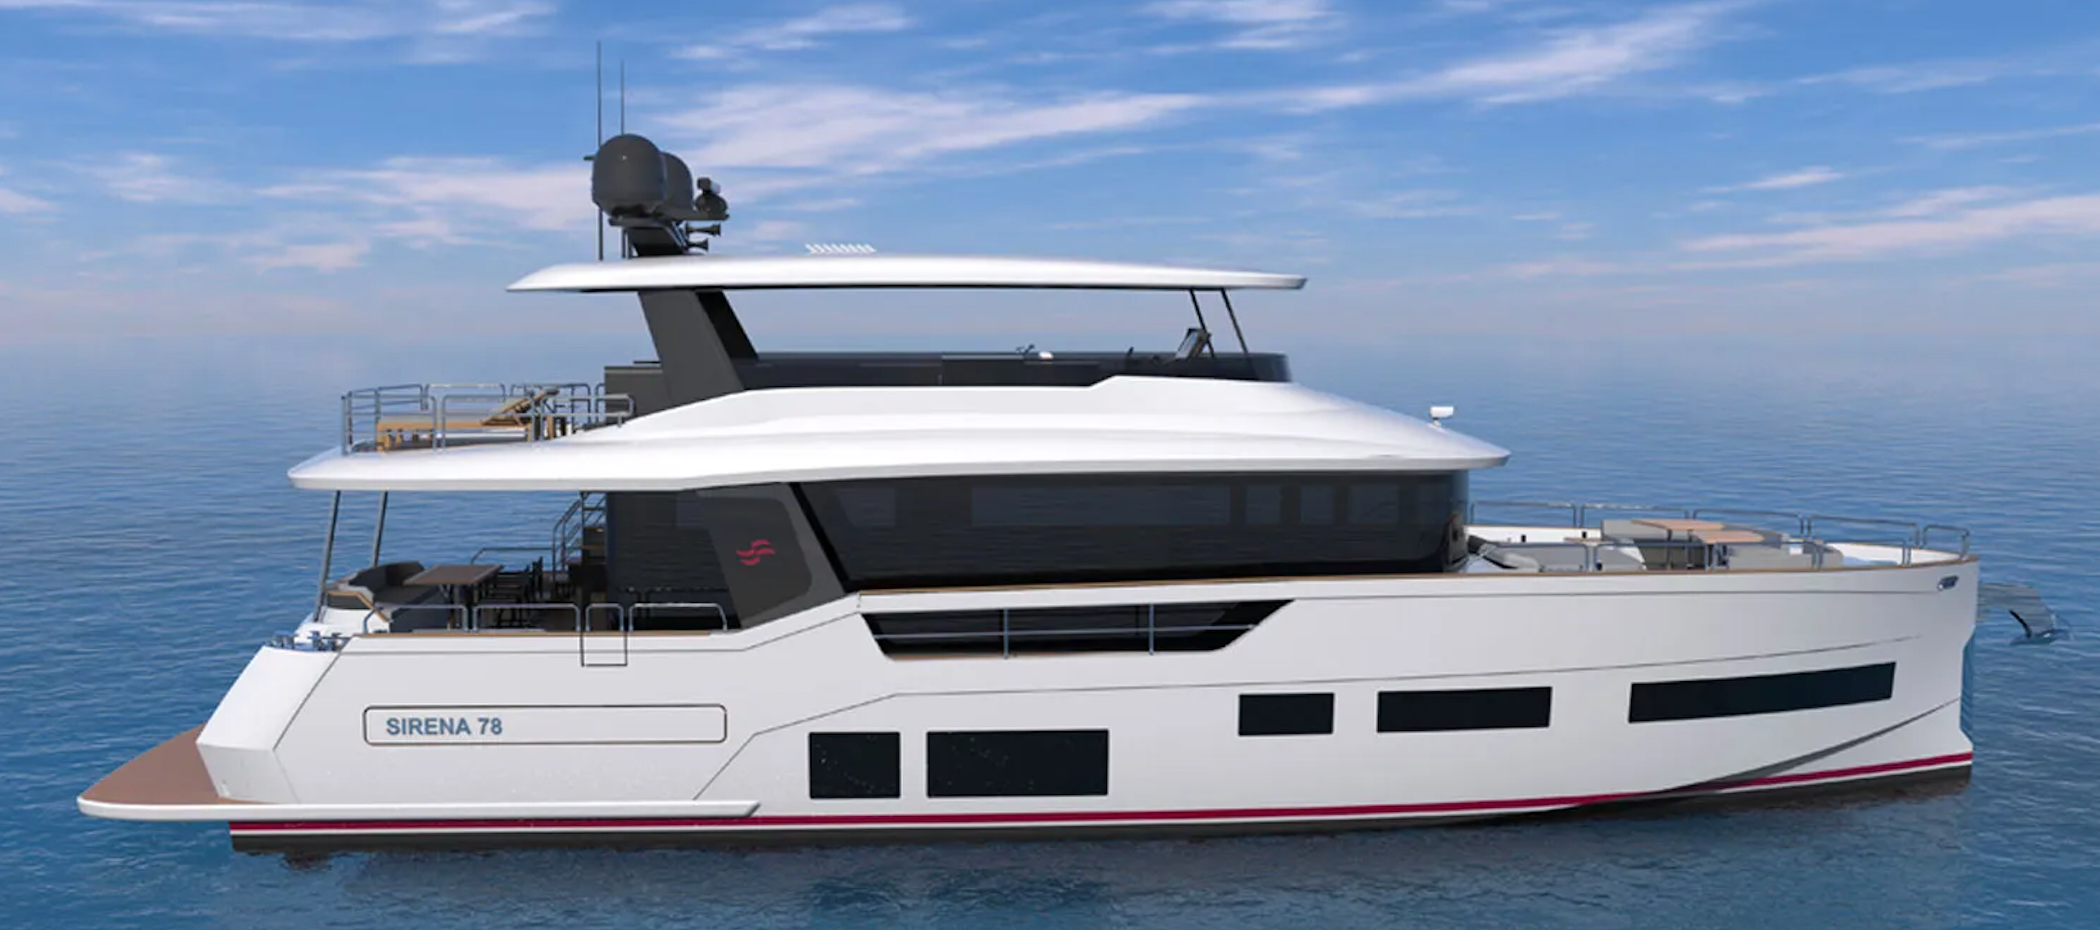 Sirena 78, new Sirena 78, new Sirena yacht